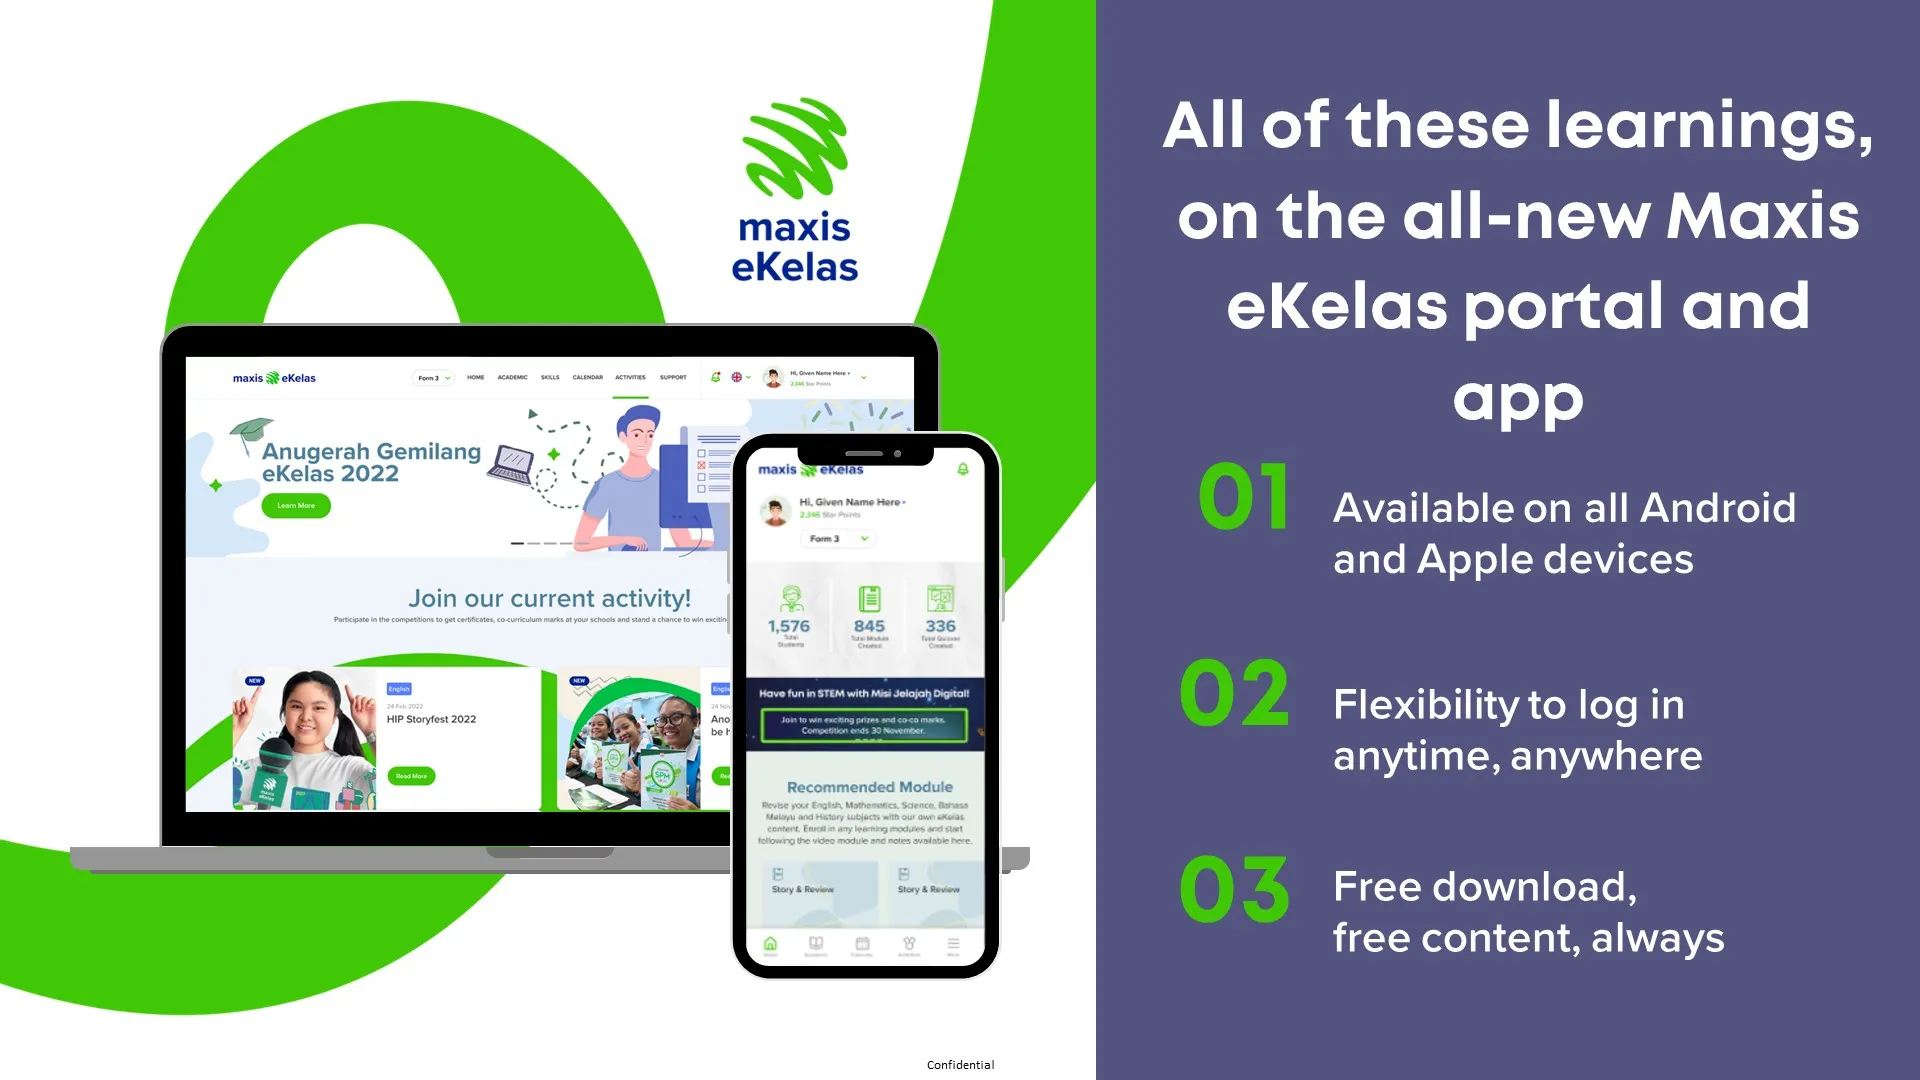 all-new Maxis eKelas portal and app